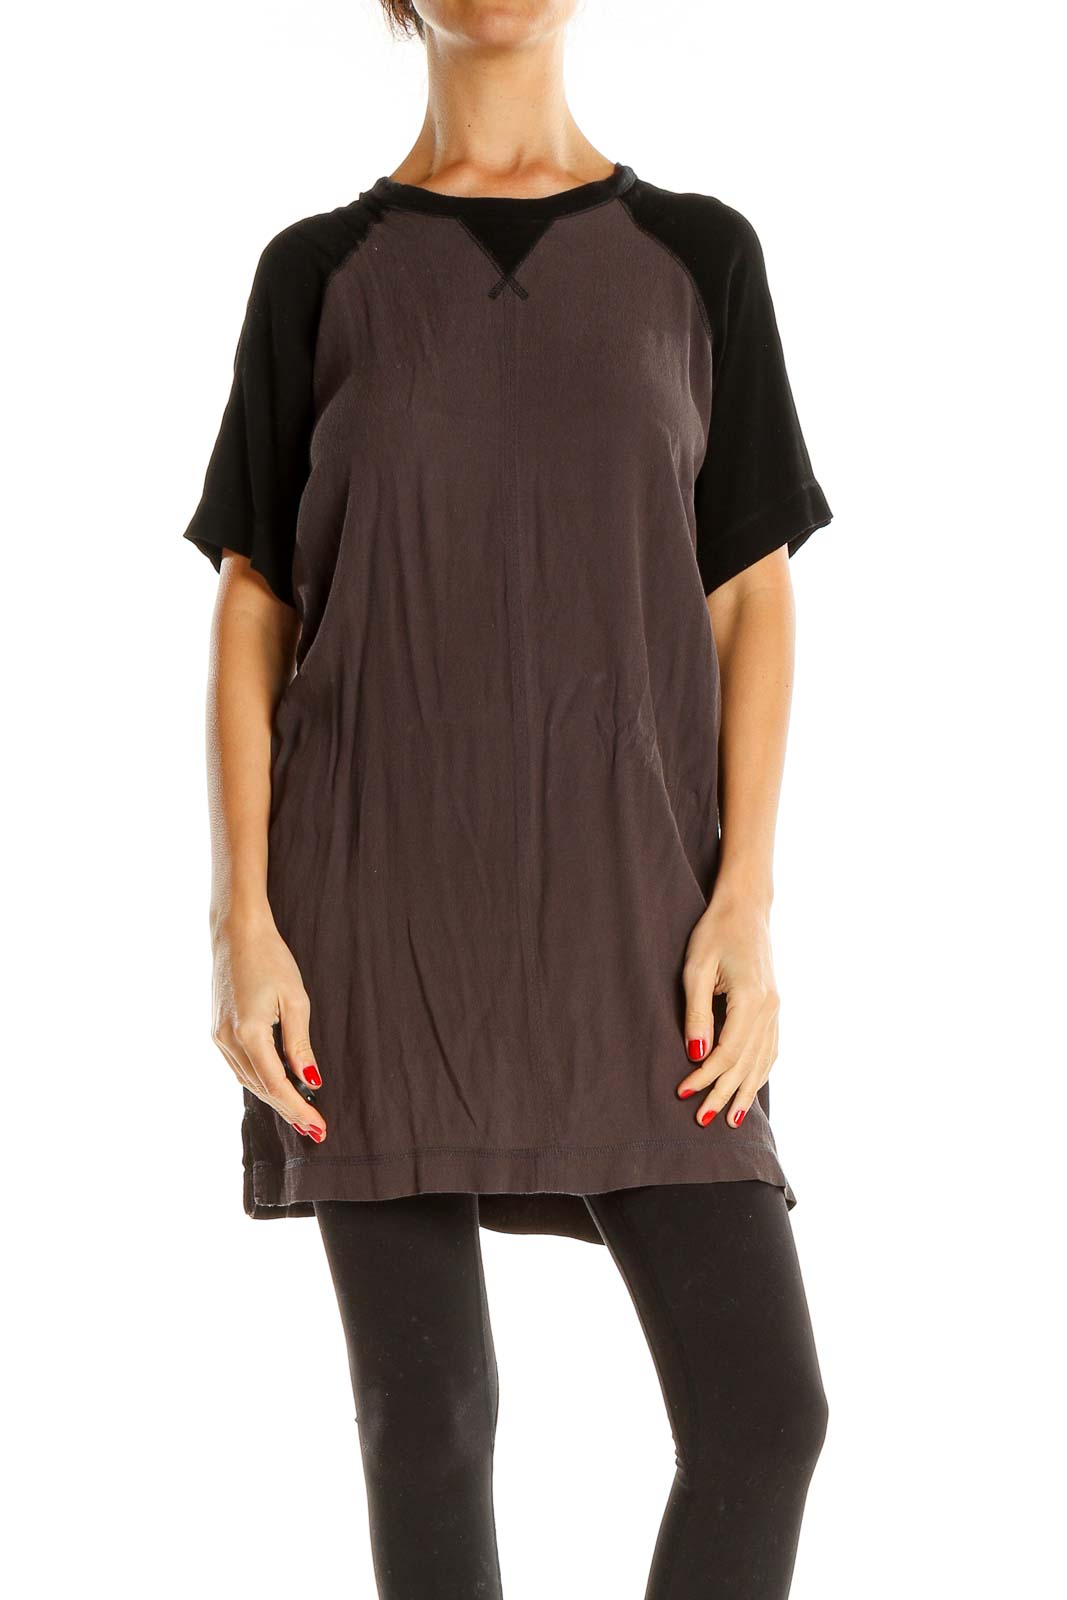 Brown Black Colorblock Casual Long Top / Dress Front